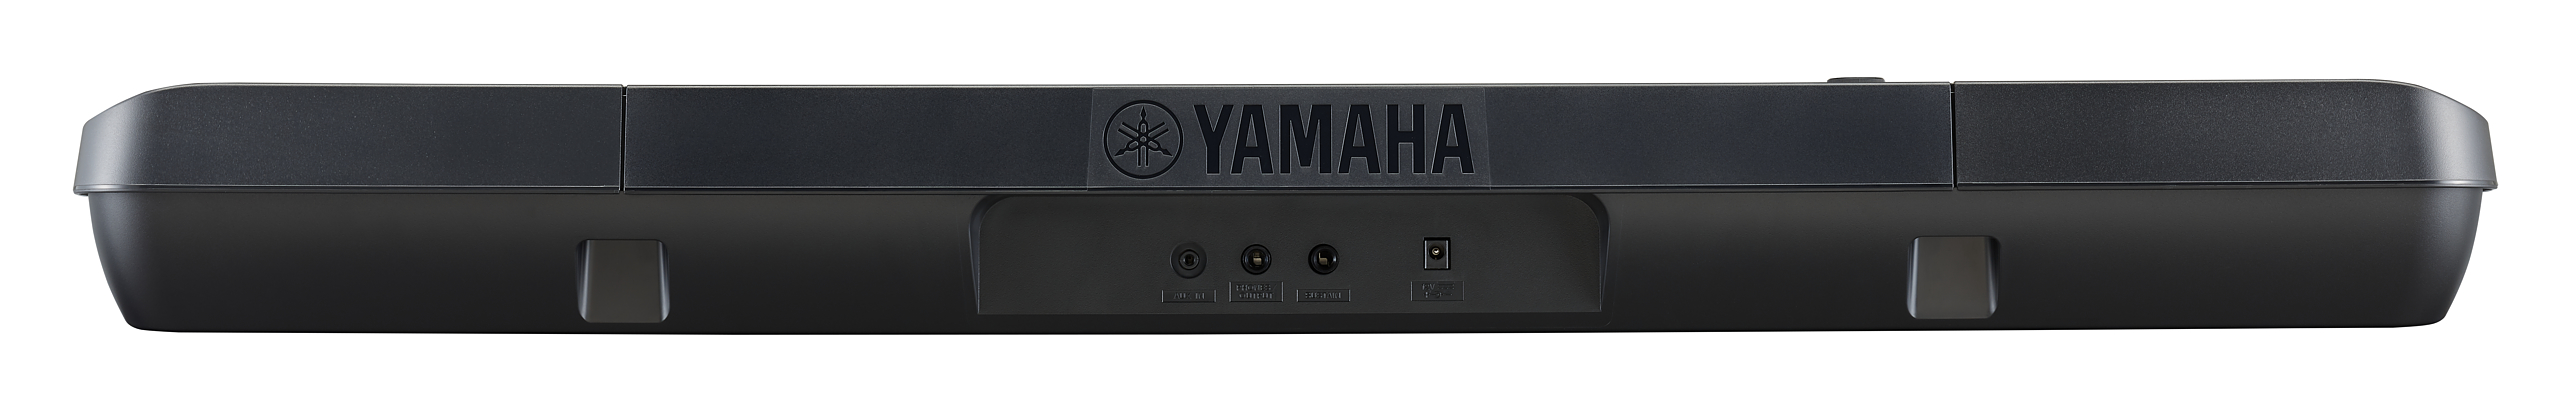 Yamaha Psr E273 - Entertainerkeyboard - Variation 3